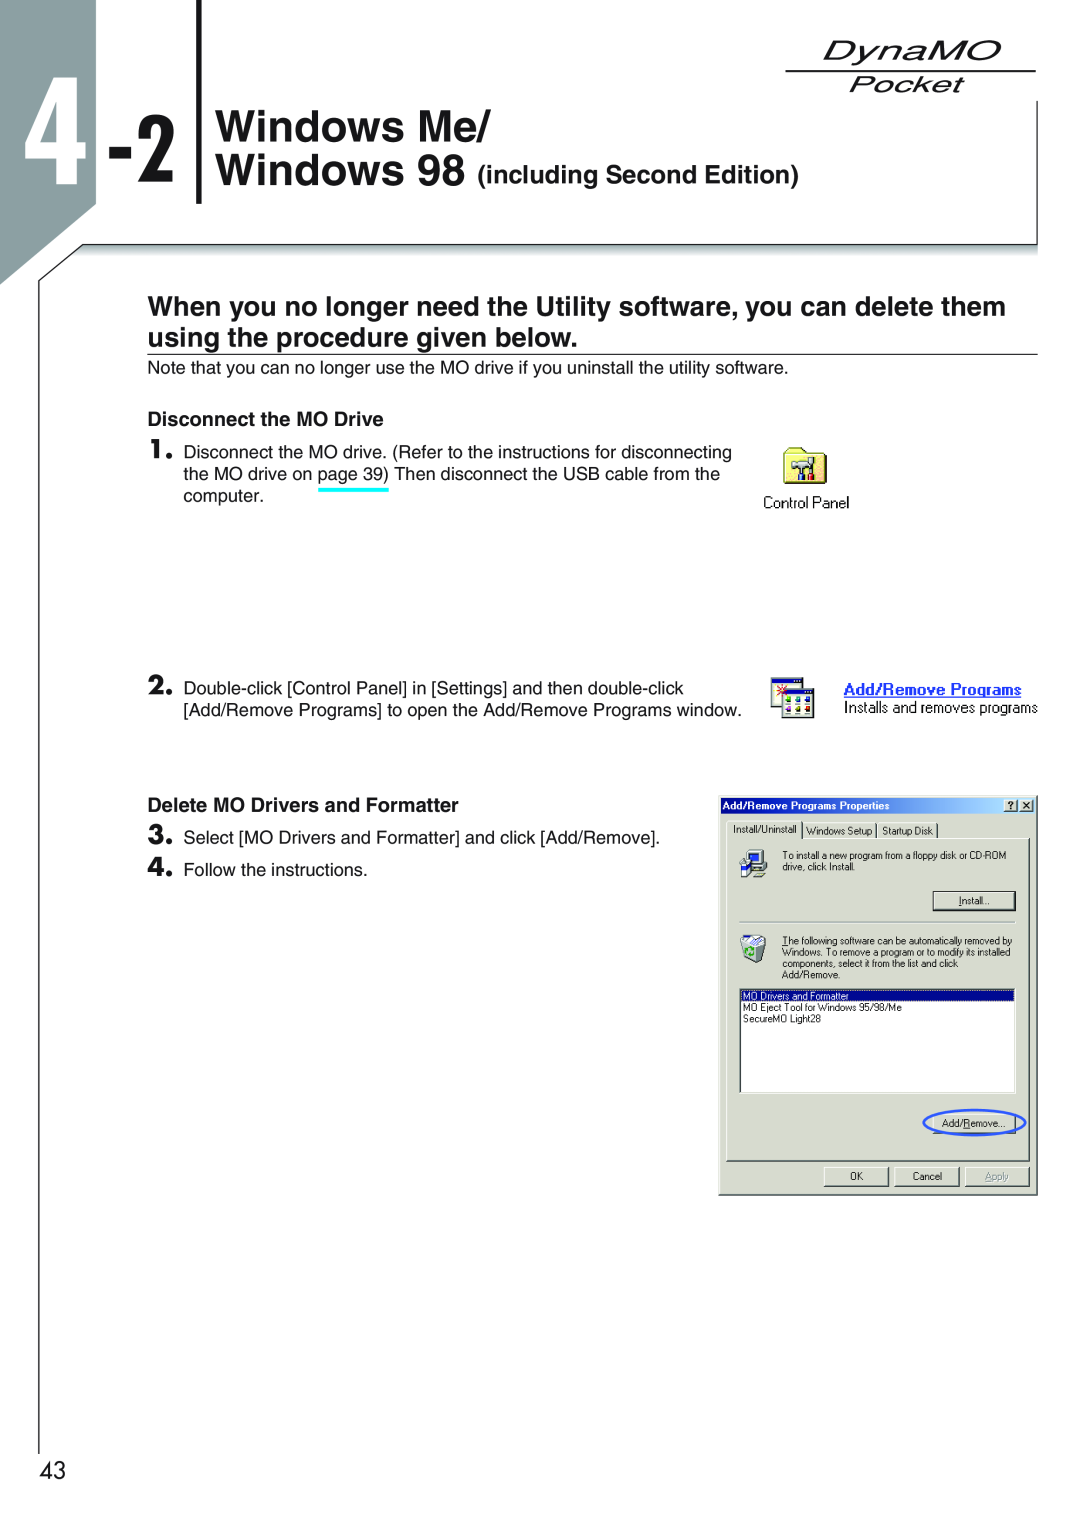 Fujitsu 1300U2 user manual 4 -2 Windows Me, Windows 98 including Second Edition, Disconnect the MO Drive 